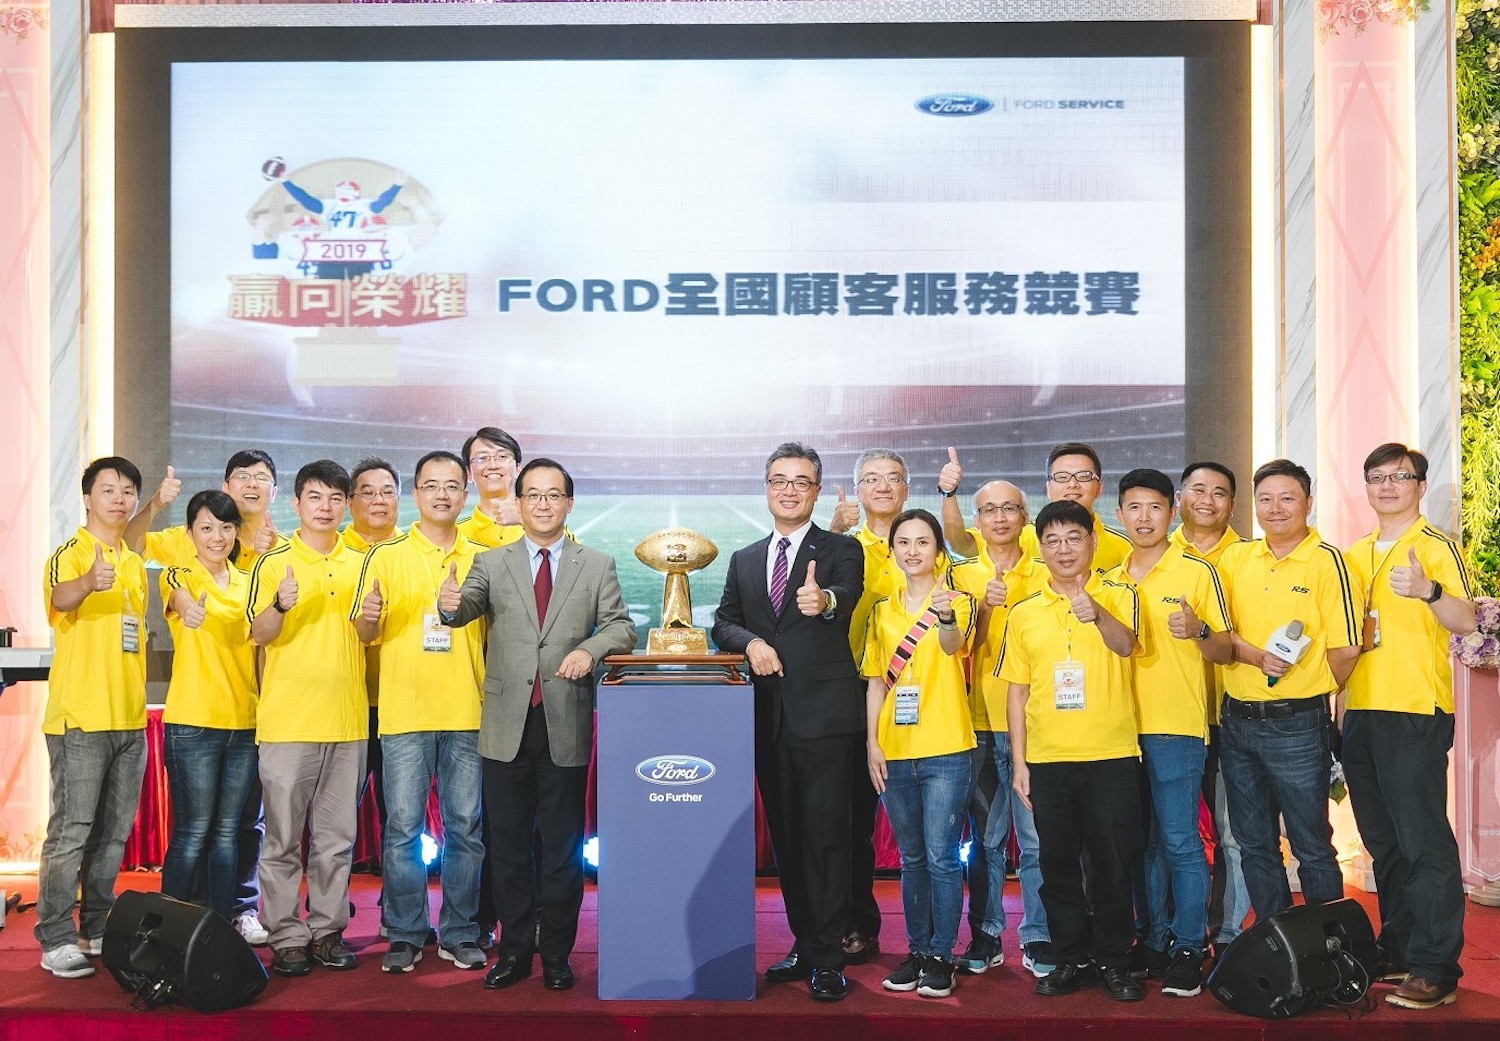 Ford 大中華區客戶服務處副總裁張偉昌（左前）、福特六和汽車顧客服務處處長陳慶裕（右前），共同帶領裁判團隊為 2019 年「Ford 全國顧客服務競賽」把關。